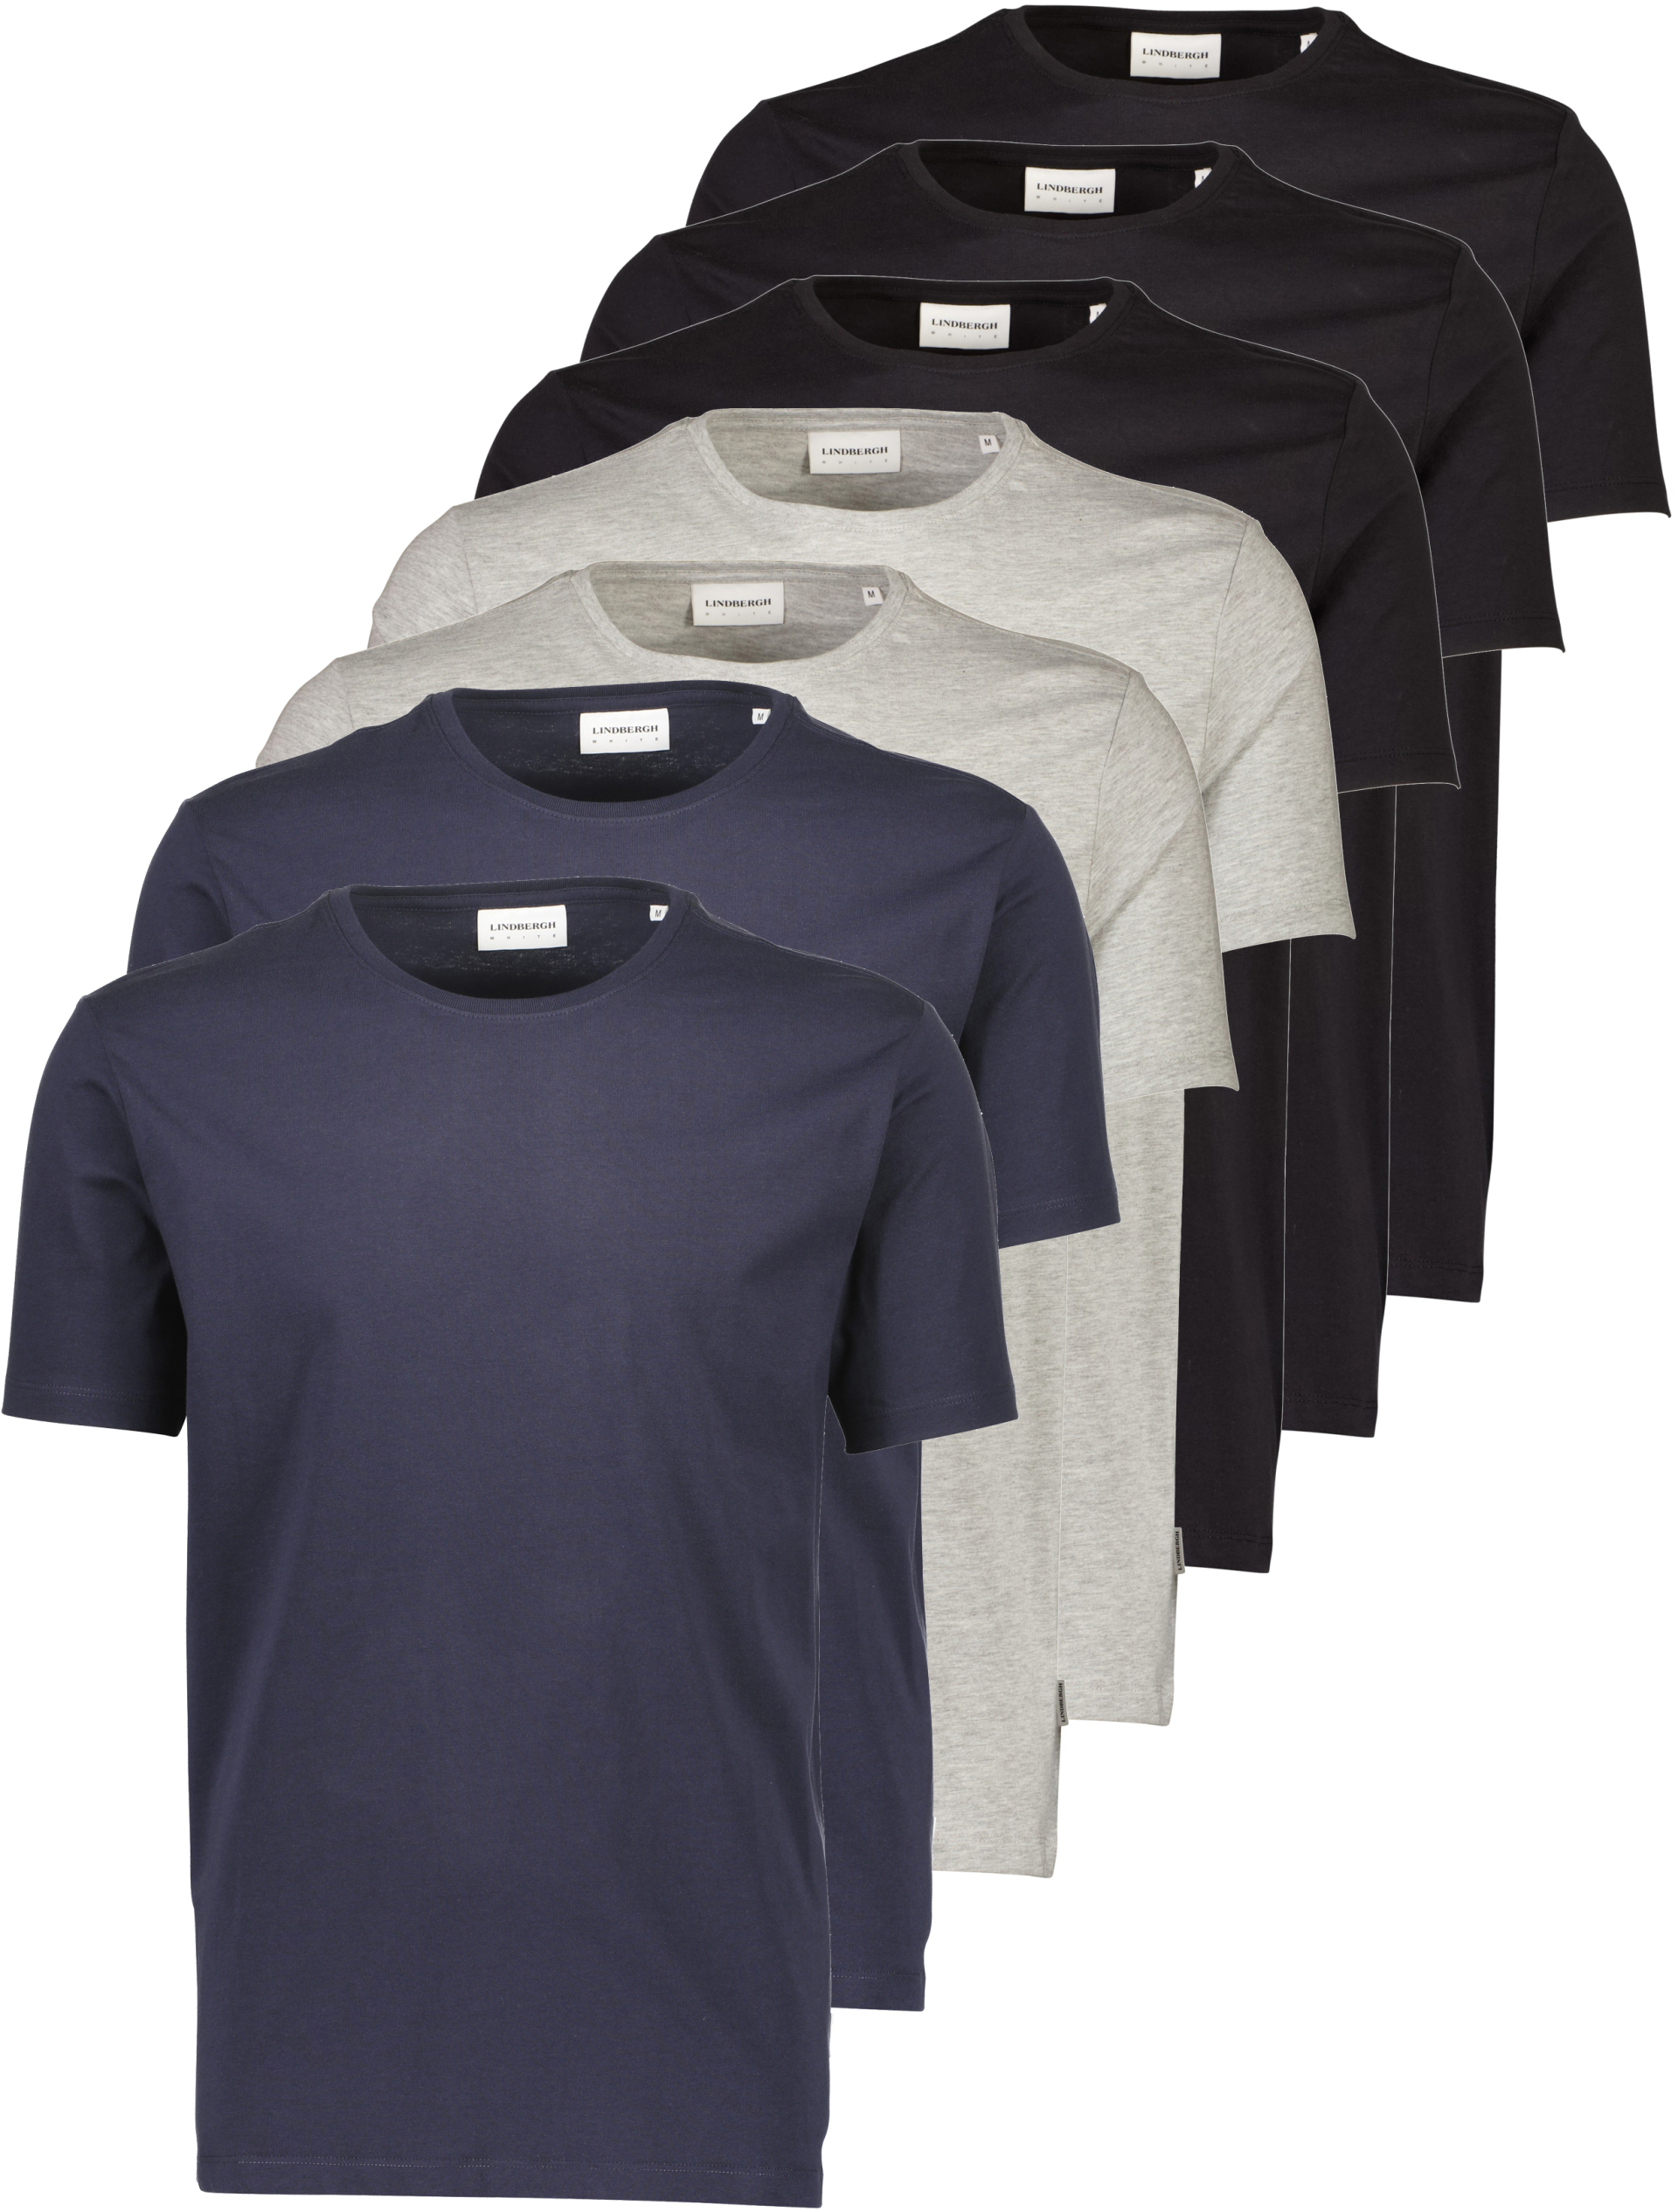 Lindbergh T-shirt multi / bl-bl-bl-gr-gr-na-na